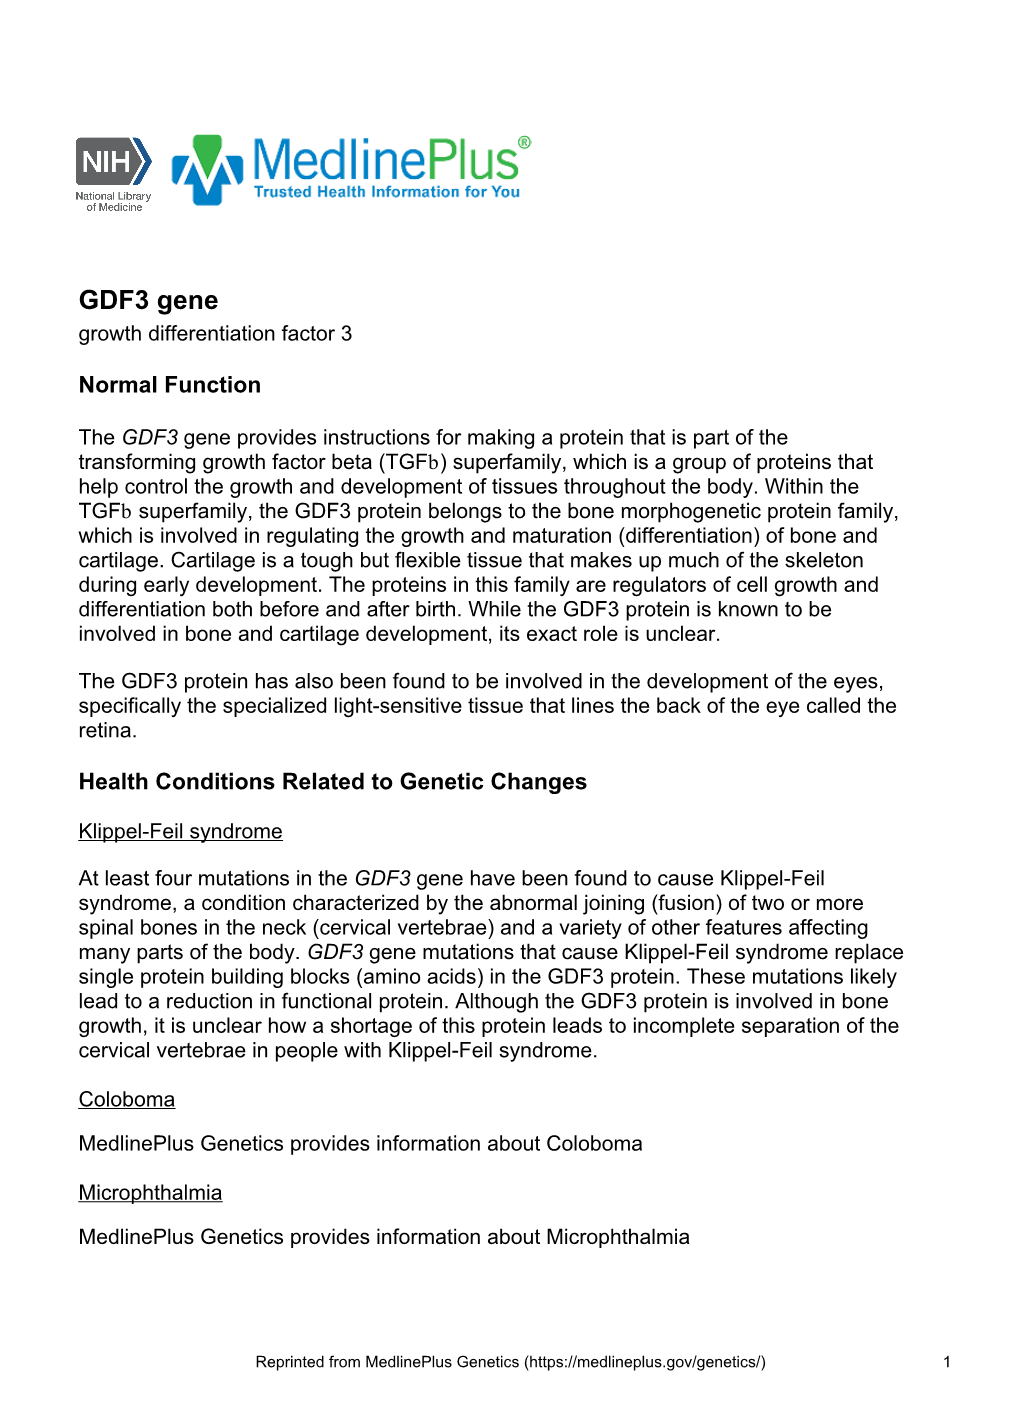 GDF3 Gene Growth Differentiation Factor 3